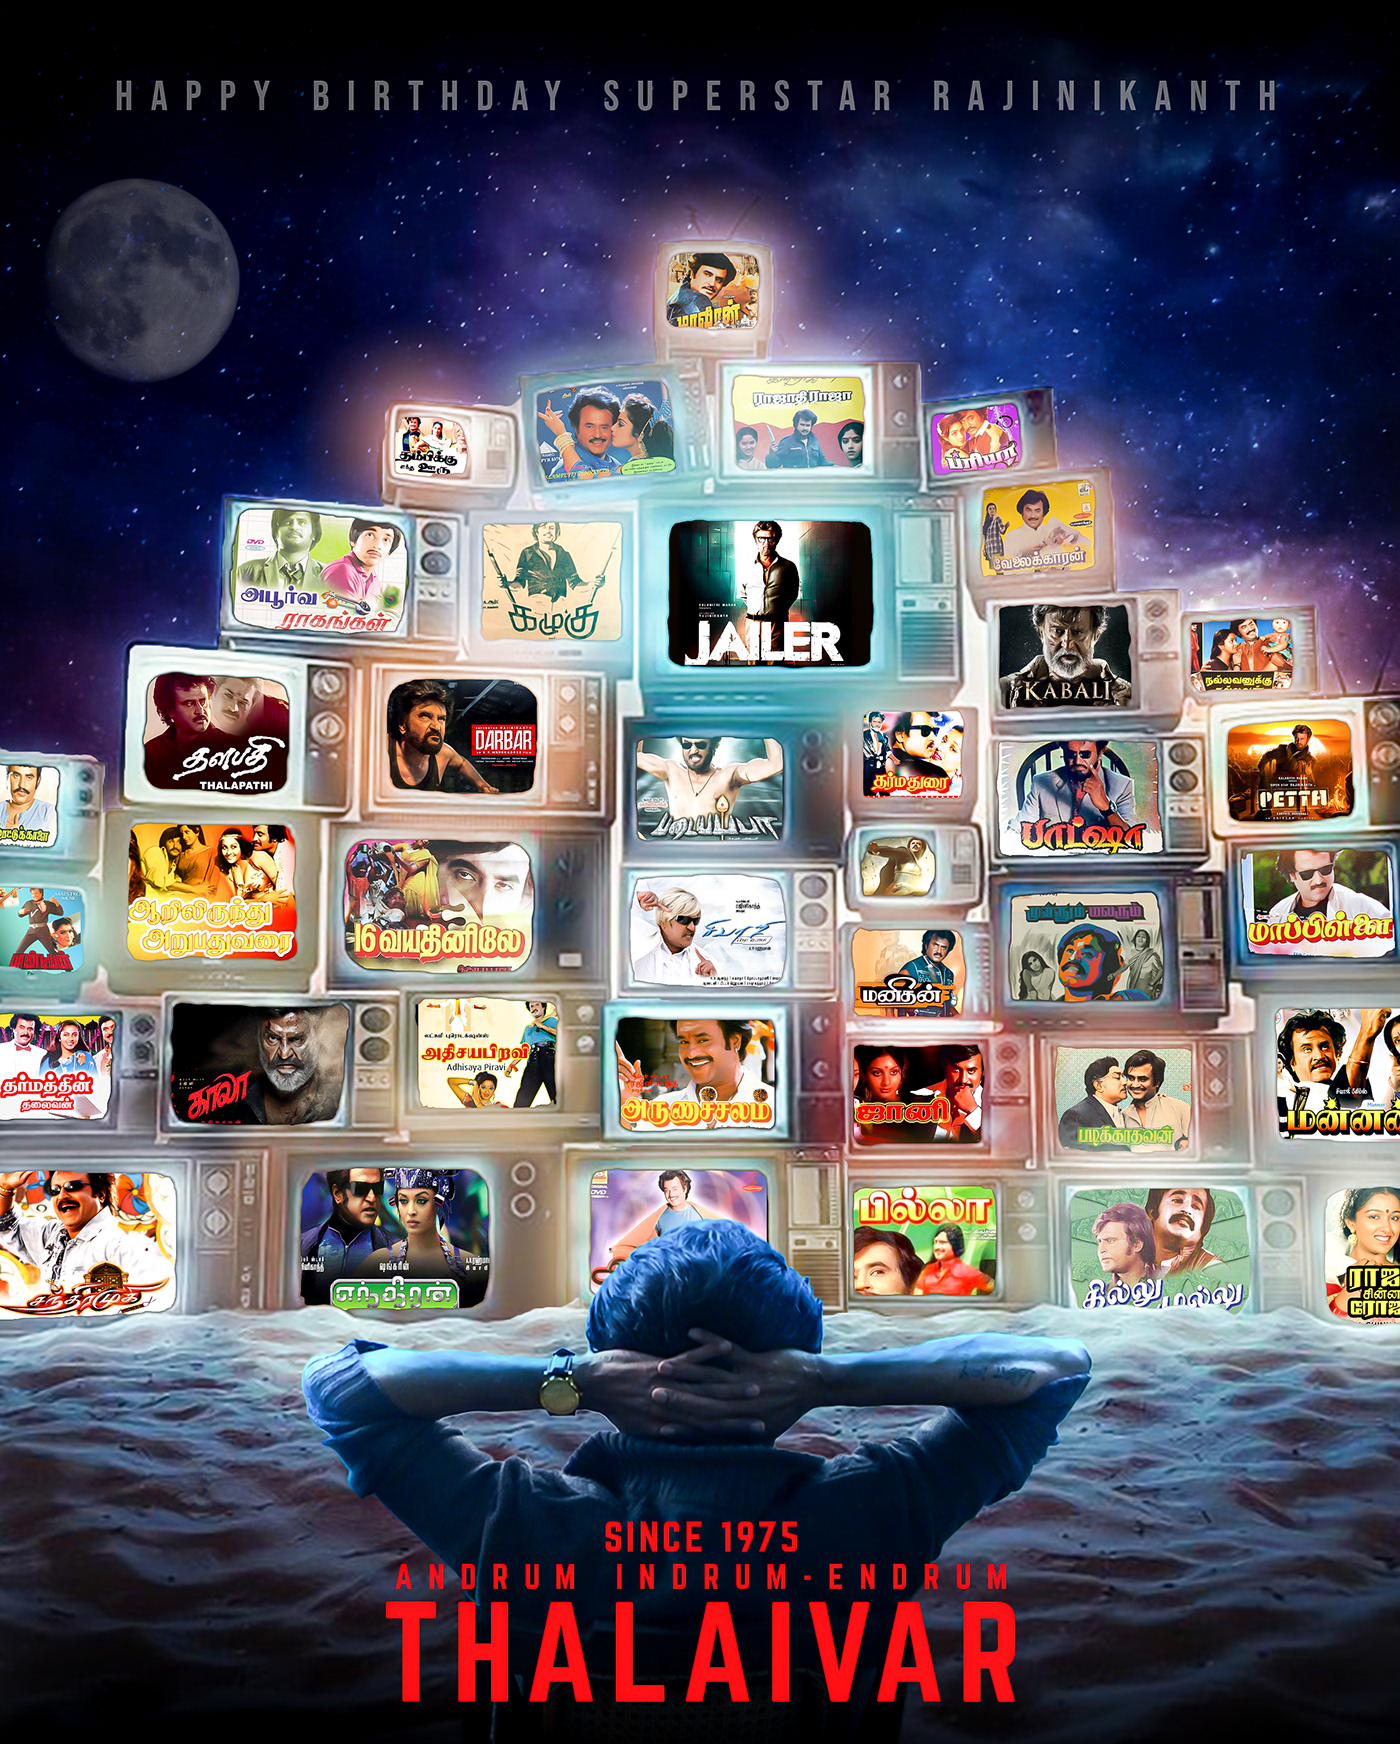 Rajinikanth Rajinikanth poster Tamil Cinema Cinema poster Poster Design design fanmade Fanmade poster 